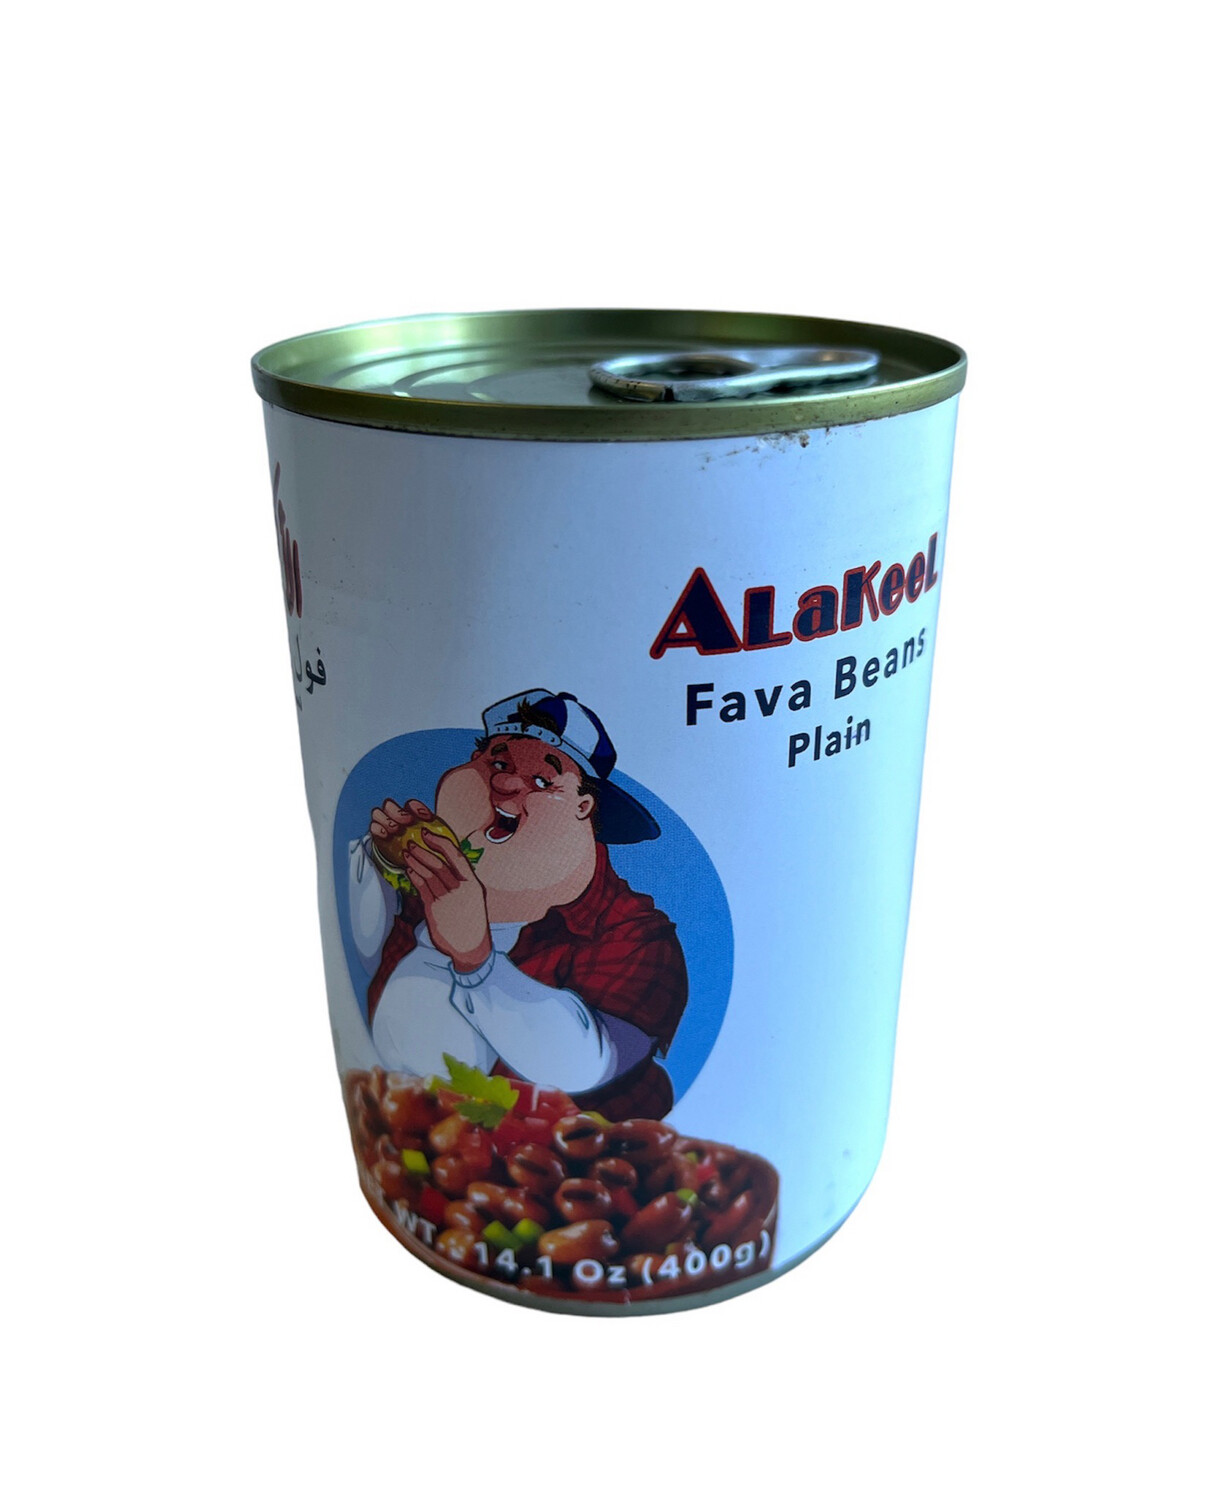 Akeel Fava Beans 24x16oz